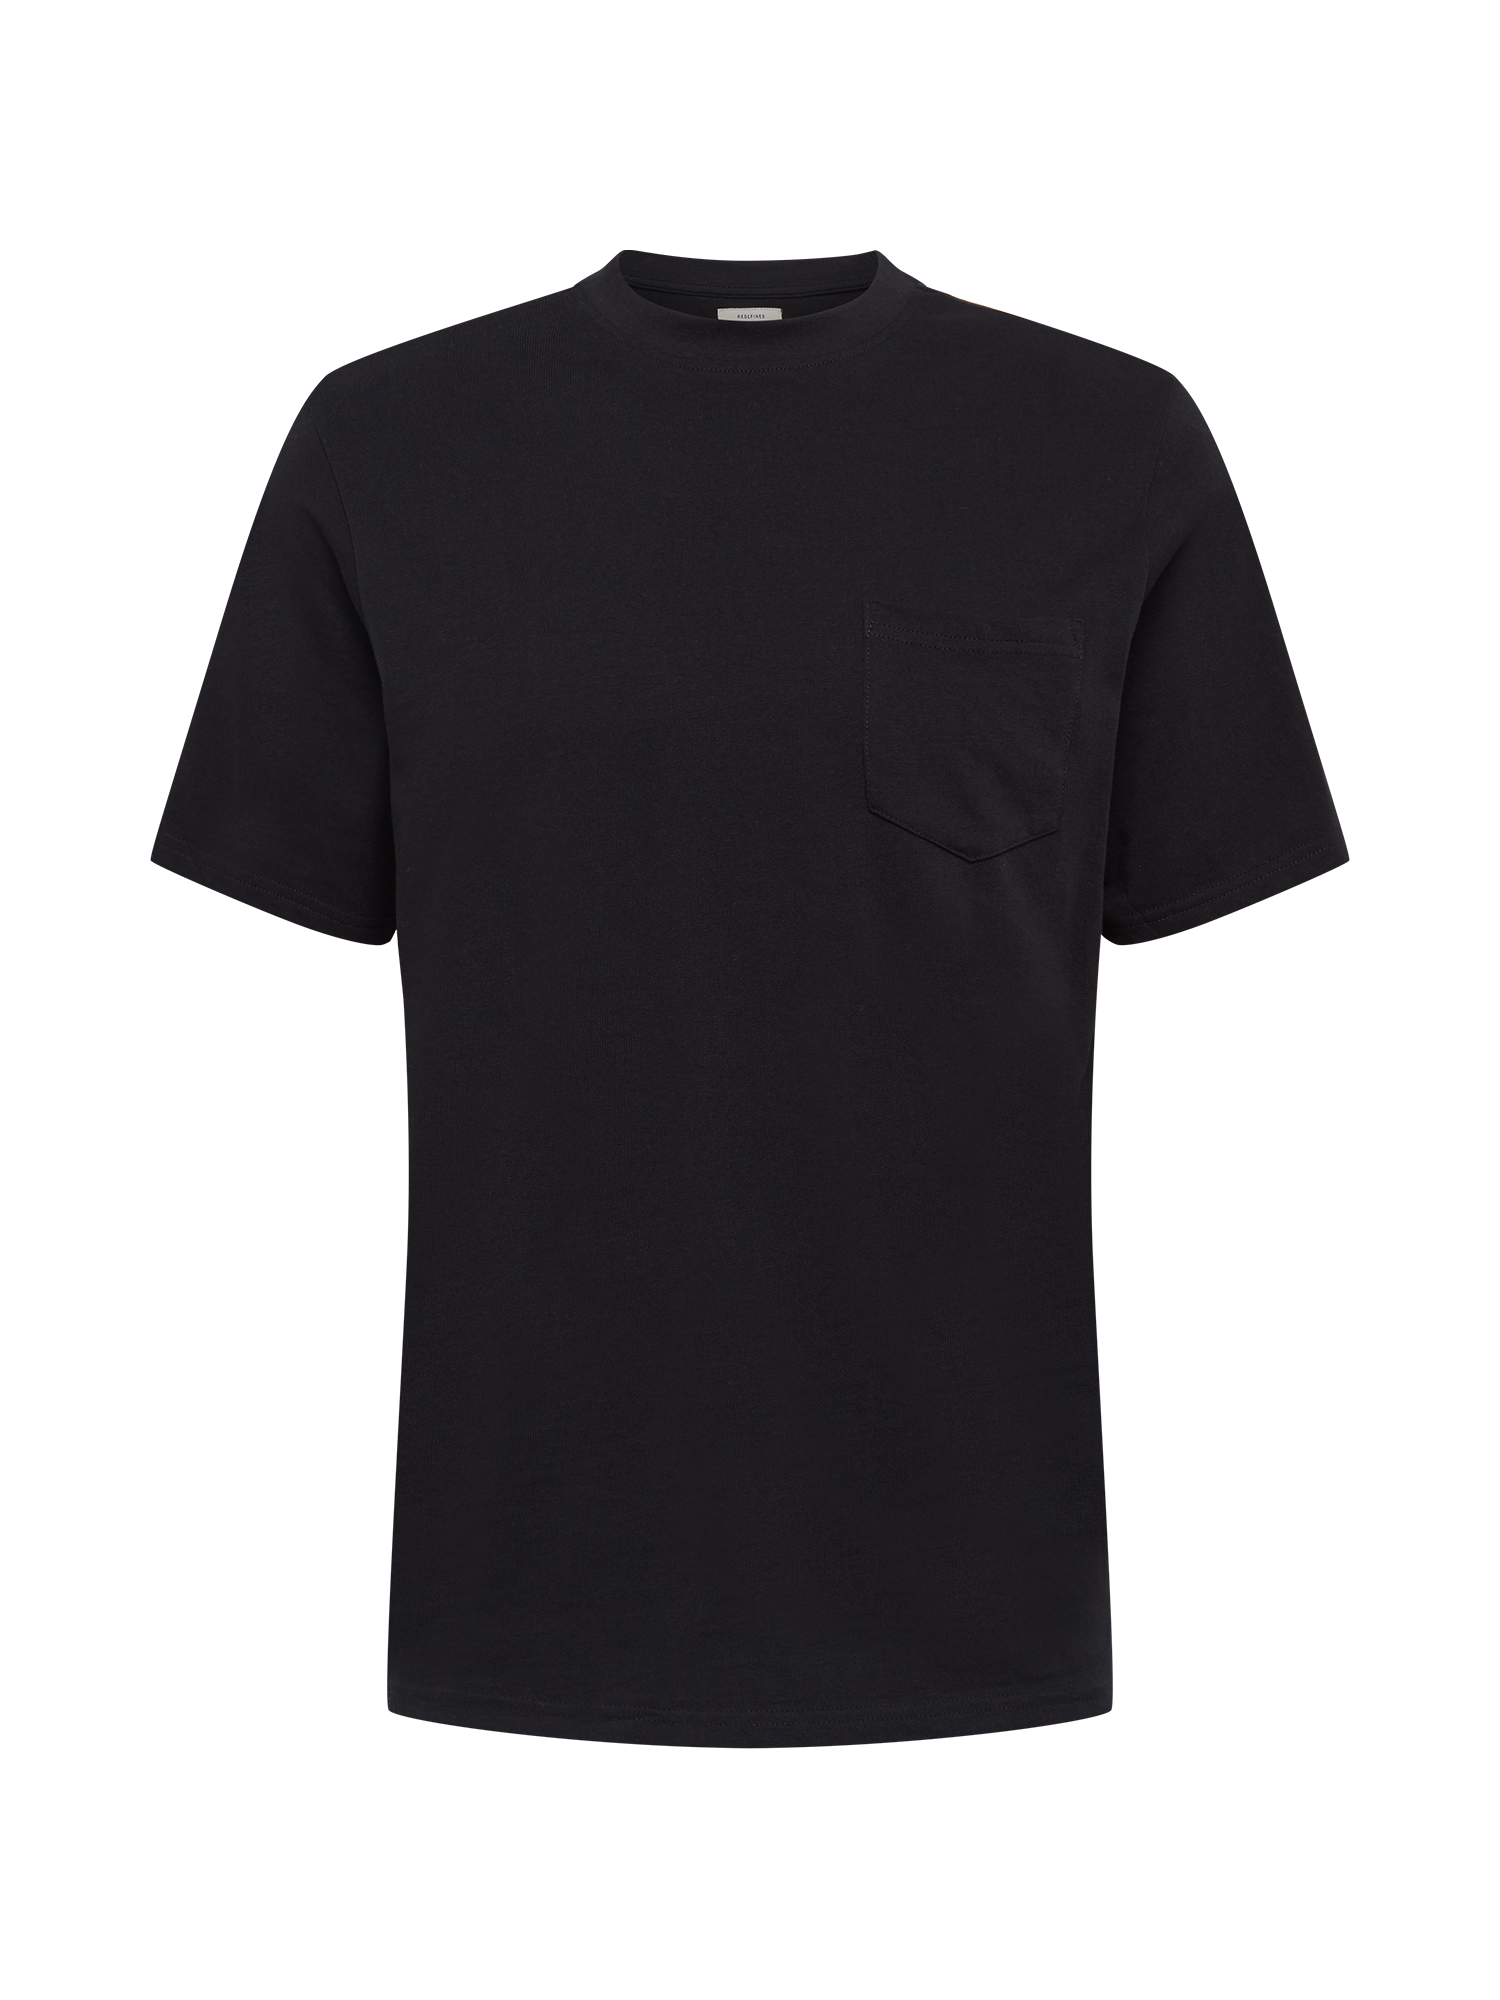 BLAJf Koszulki Redefined Rebel Koszulka Clarke w kolorze Czarnym 